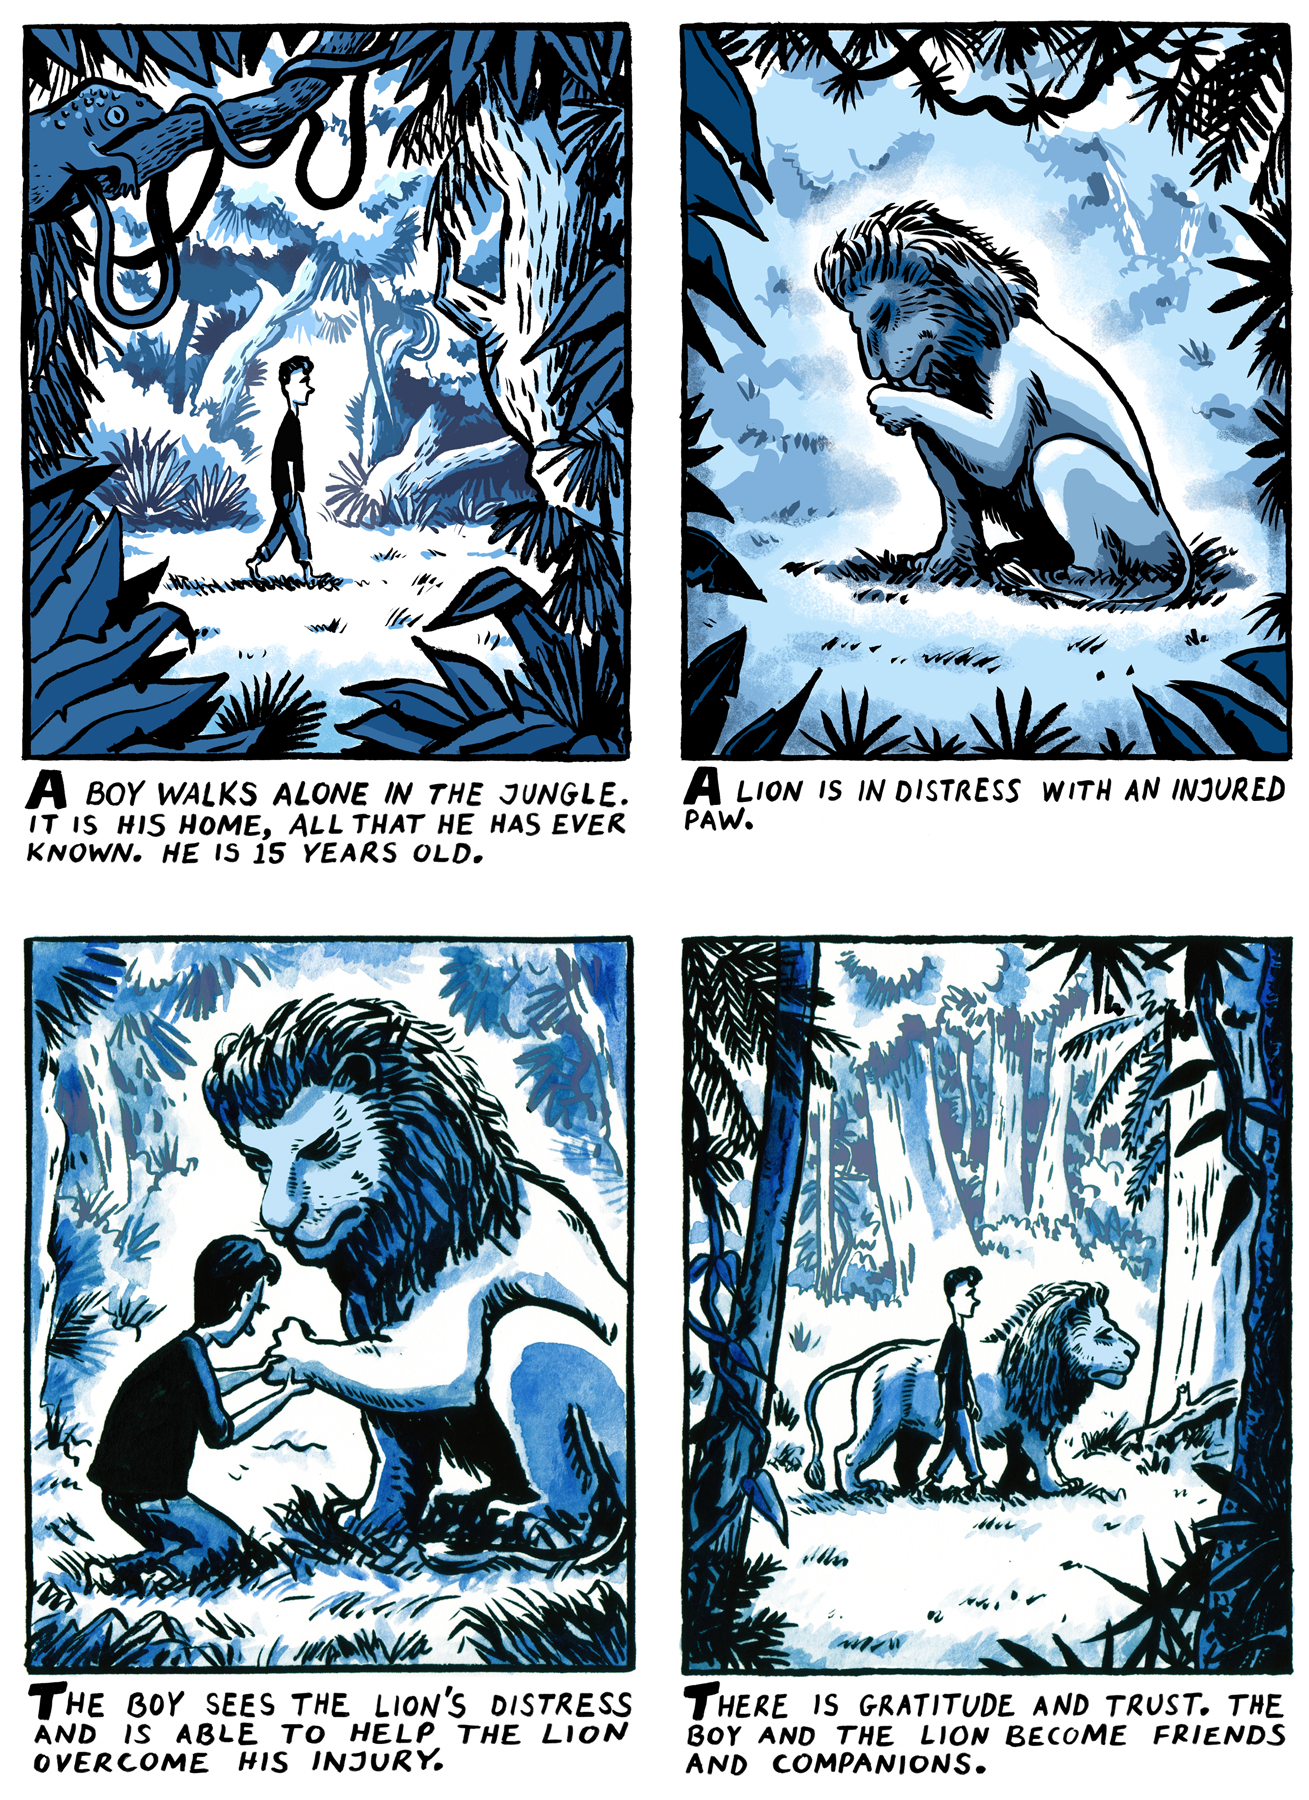 My Extraordinary Dream, panels 1-4.